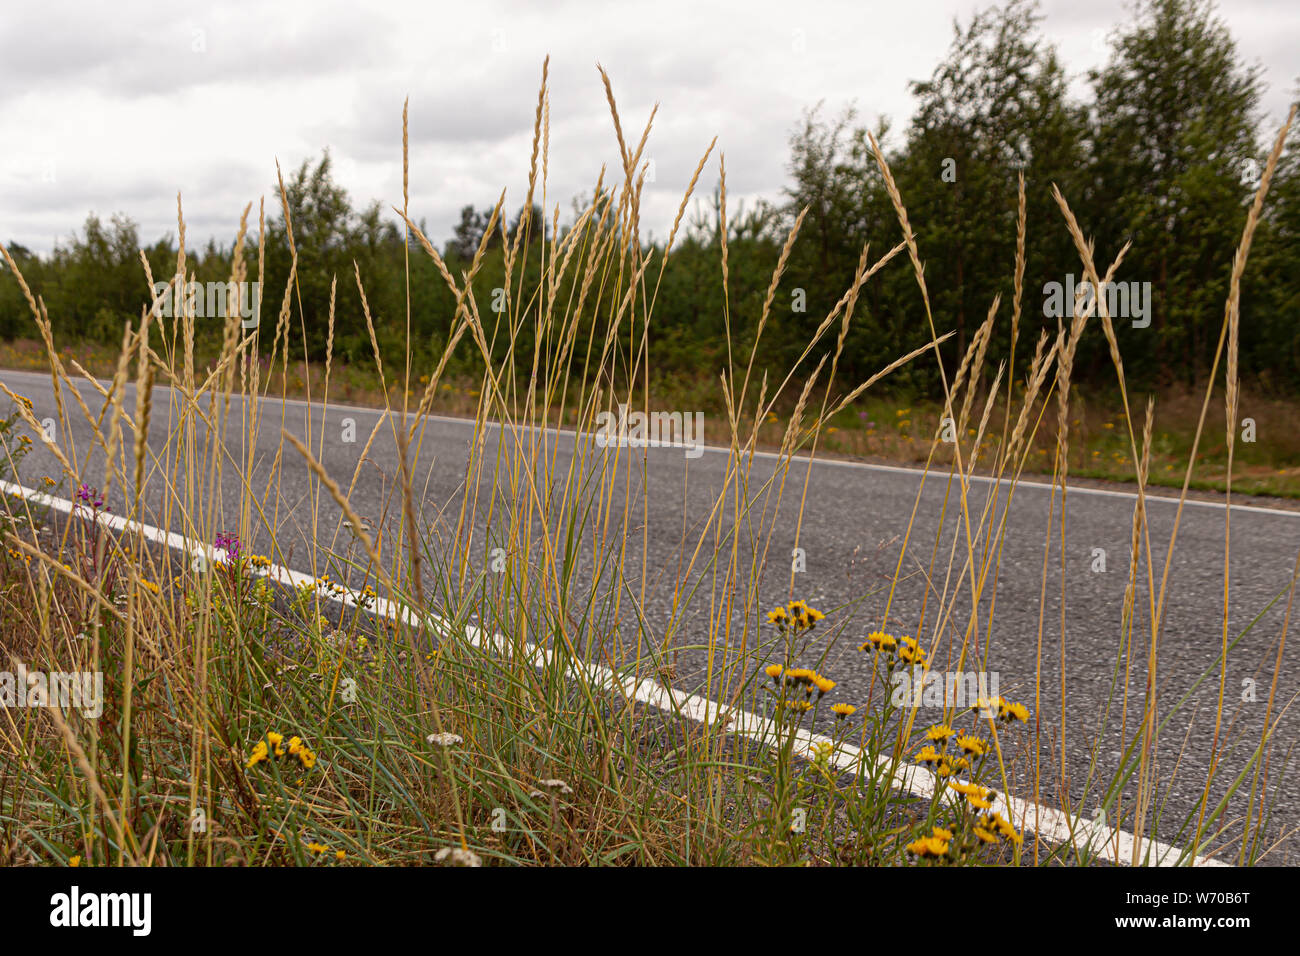 Hailuoto tiene las mismas plantas como el paseo al lado de la carretera, la isla de Hailuoto,Norte de Ostrobotnia, Finlandia Foto de stock